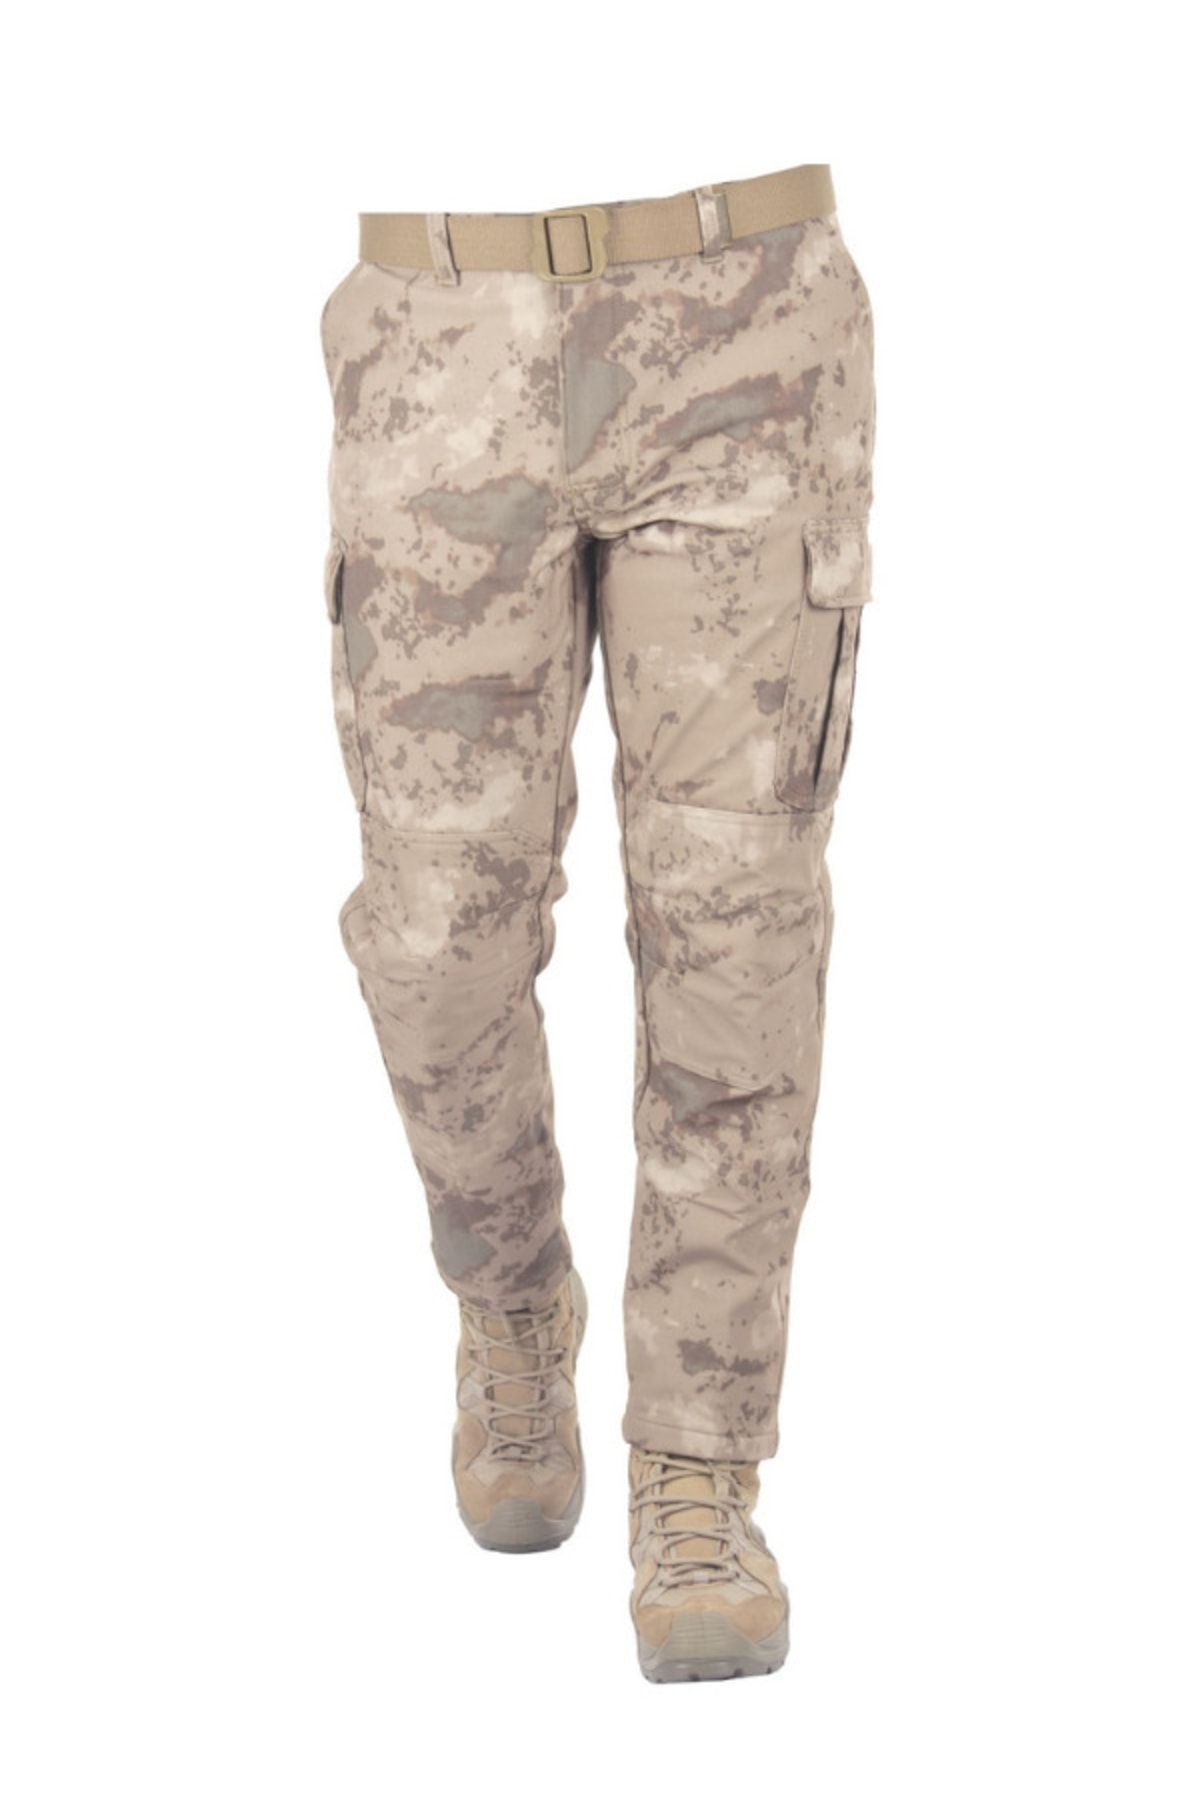 Burak Askeri Malzeme Jandarma Kamuflaj Renkli M Beden Kargo Cepli Orijinal Garantili Kaliteli Nano Pantolonlar